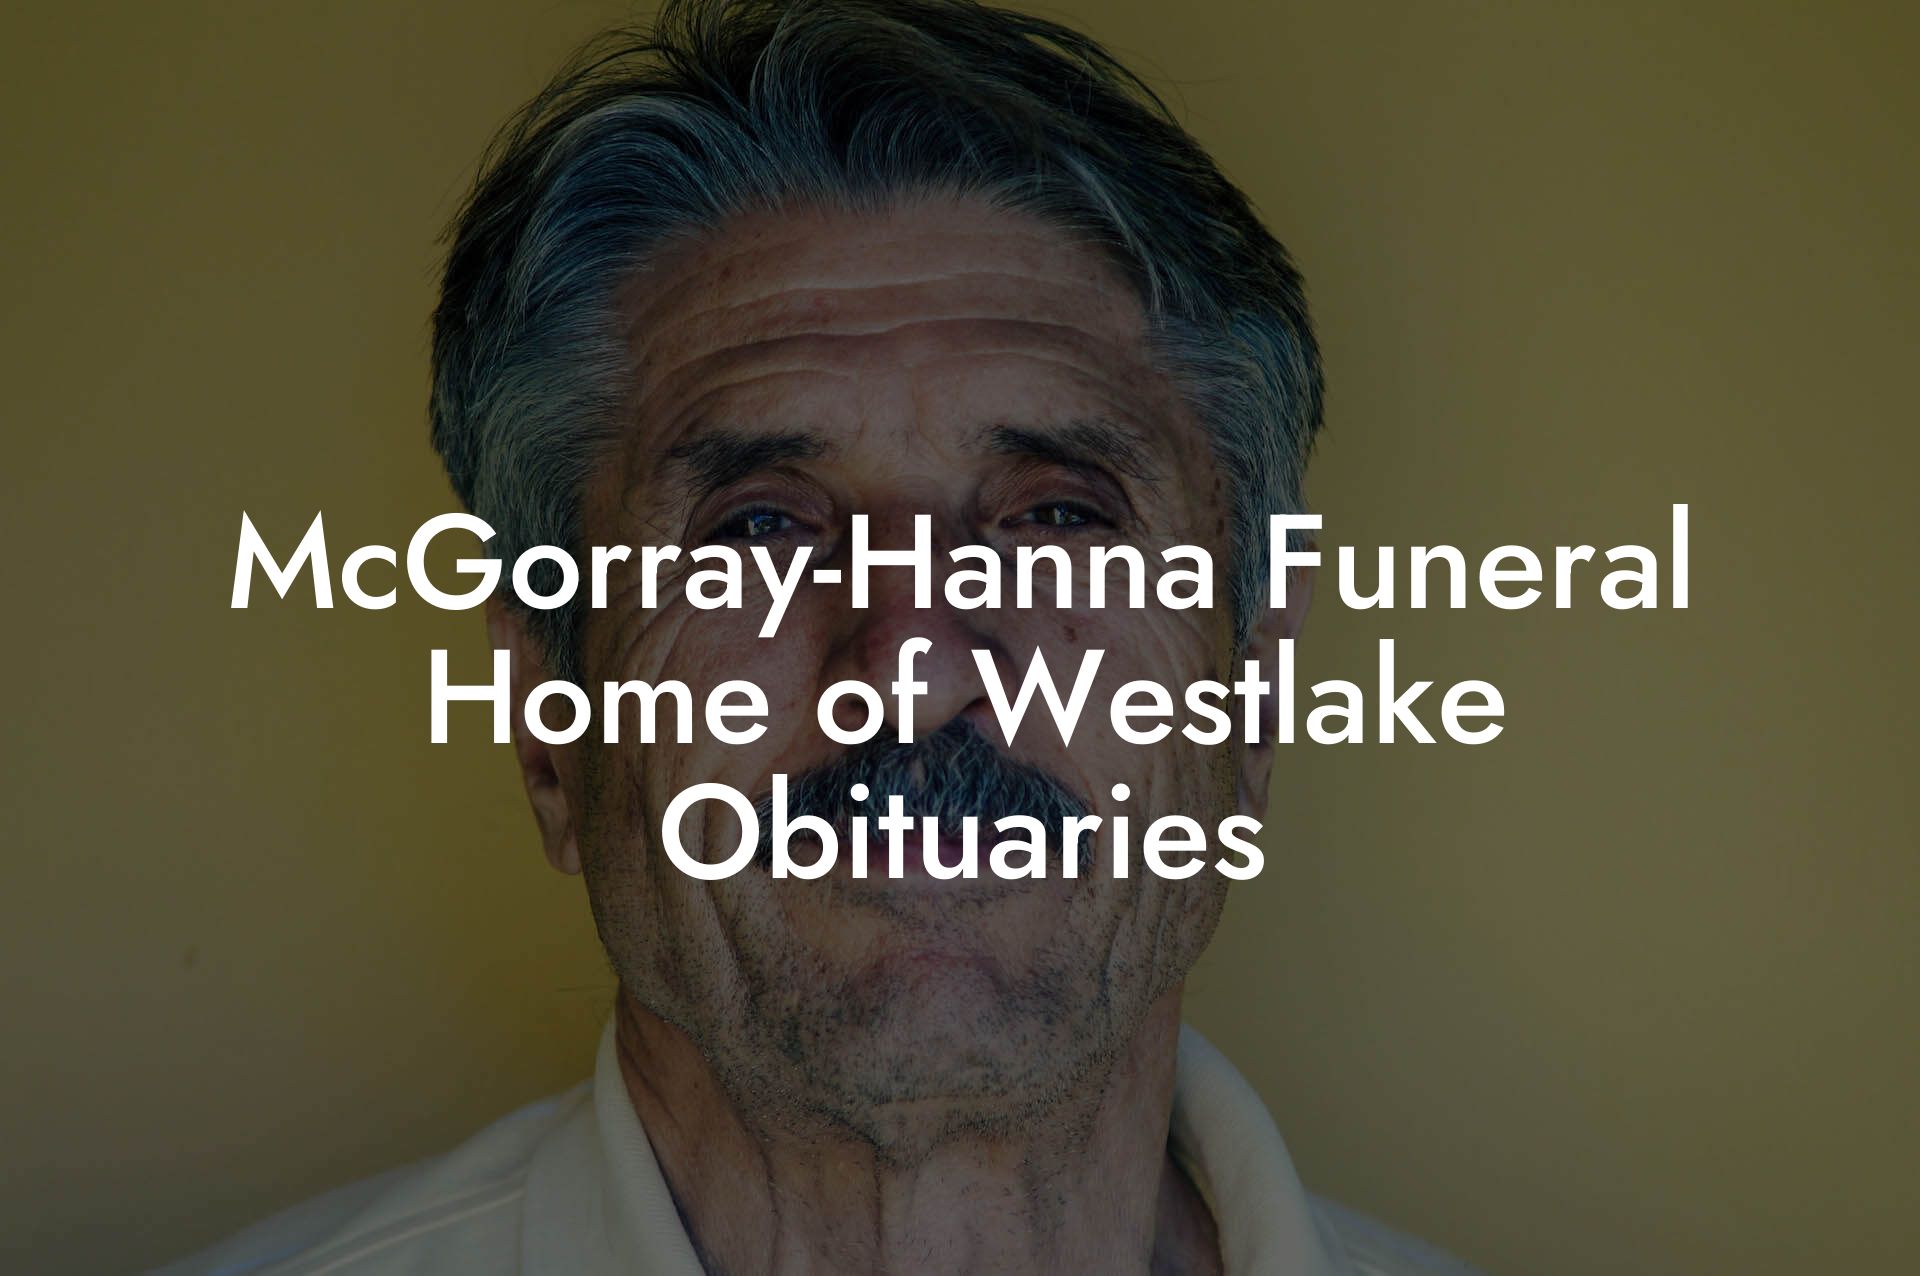 McGorray-Hanna Funeral Home of Westlake Obituaries